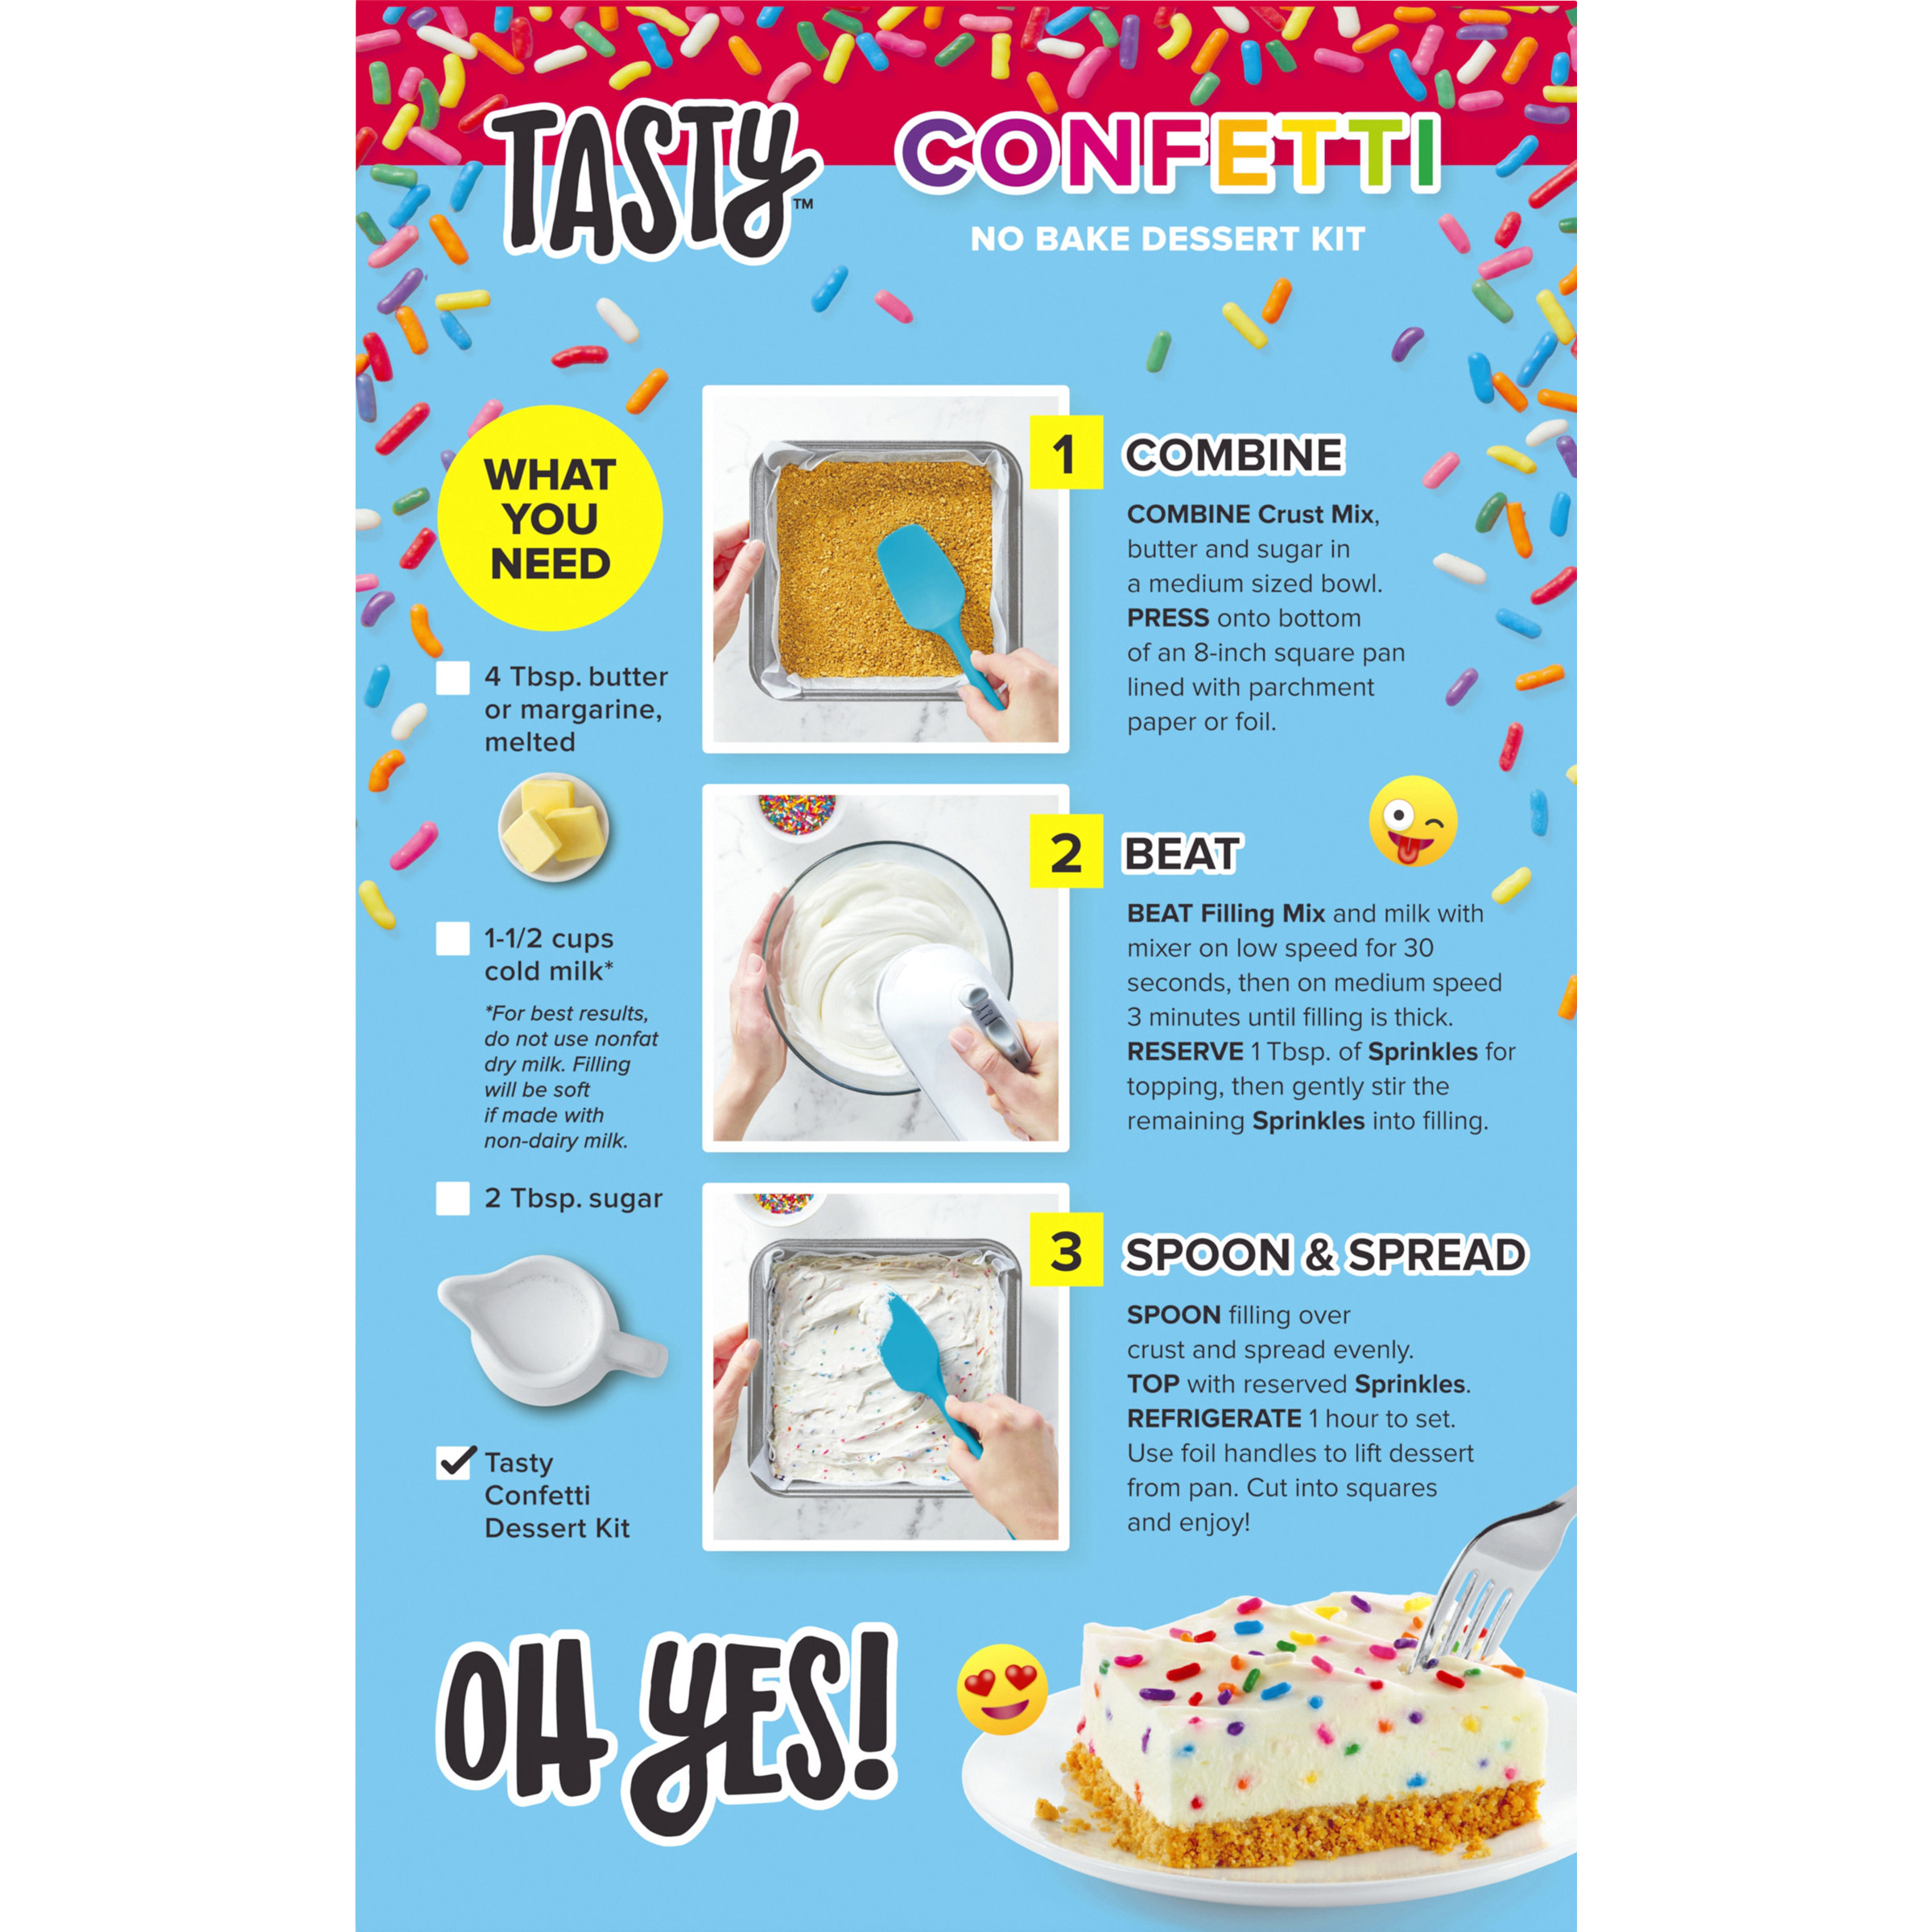 Tasty No Bake Confetti Dessert Kit with Sprinkles, Filling & Crust Mix, 10.76 oz Box - image 2 of 8